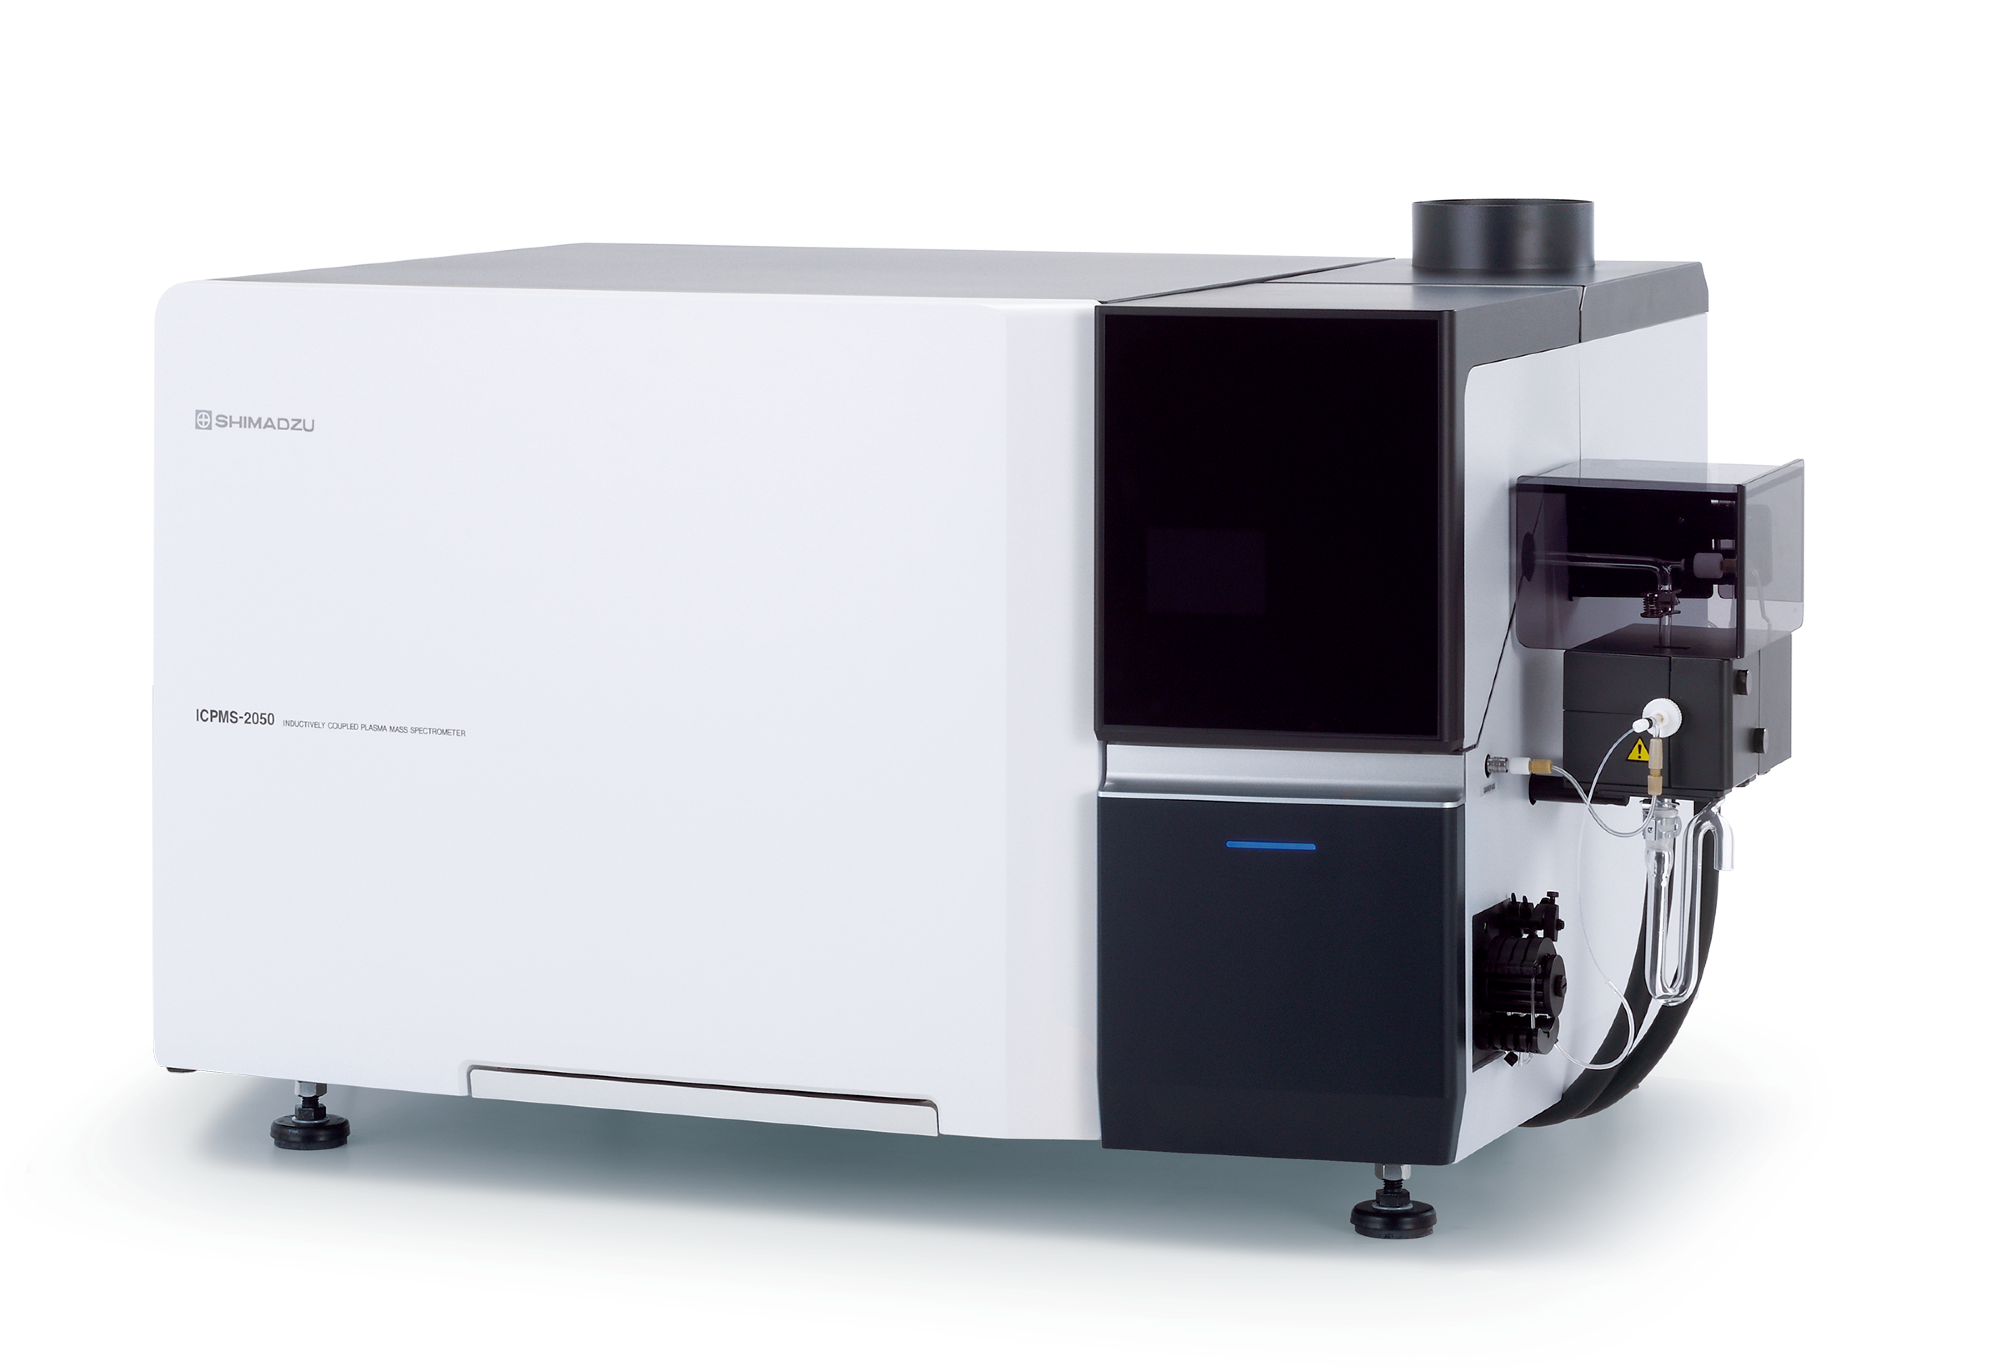 Shimadzu’s New Inductively Coupled Plasma Mass Spectrometer Series Provides High-Performance Eco-Friendly Elemental Analysis